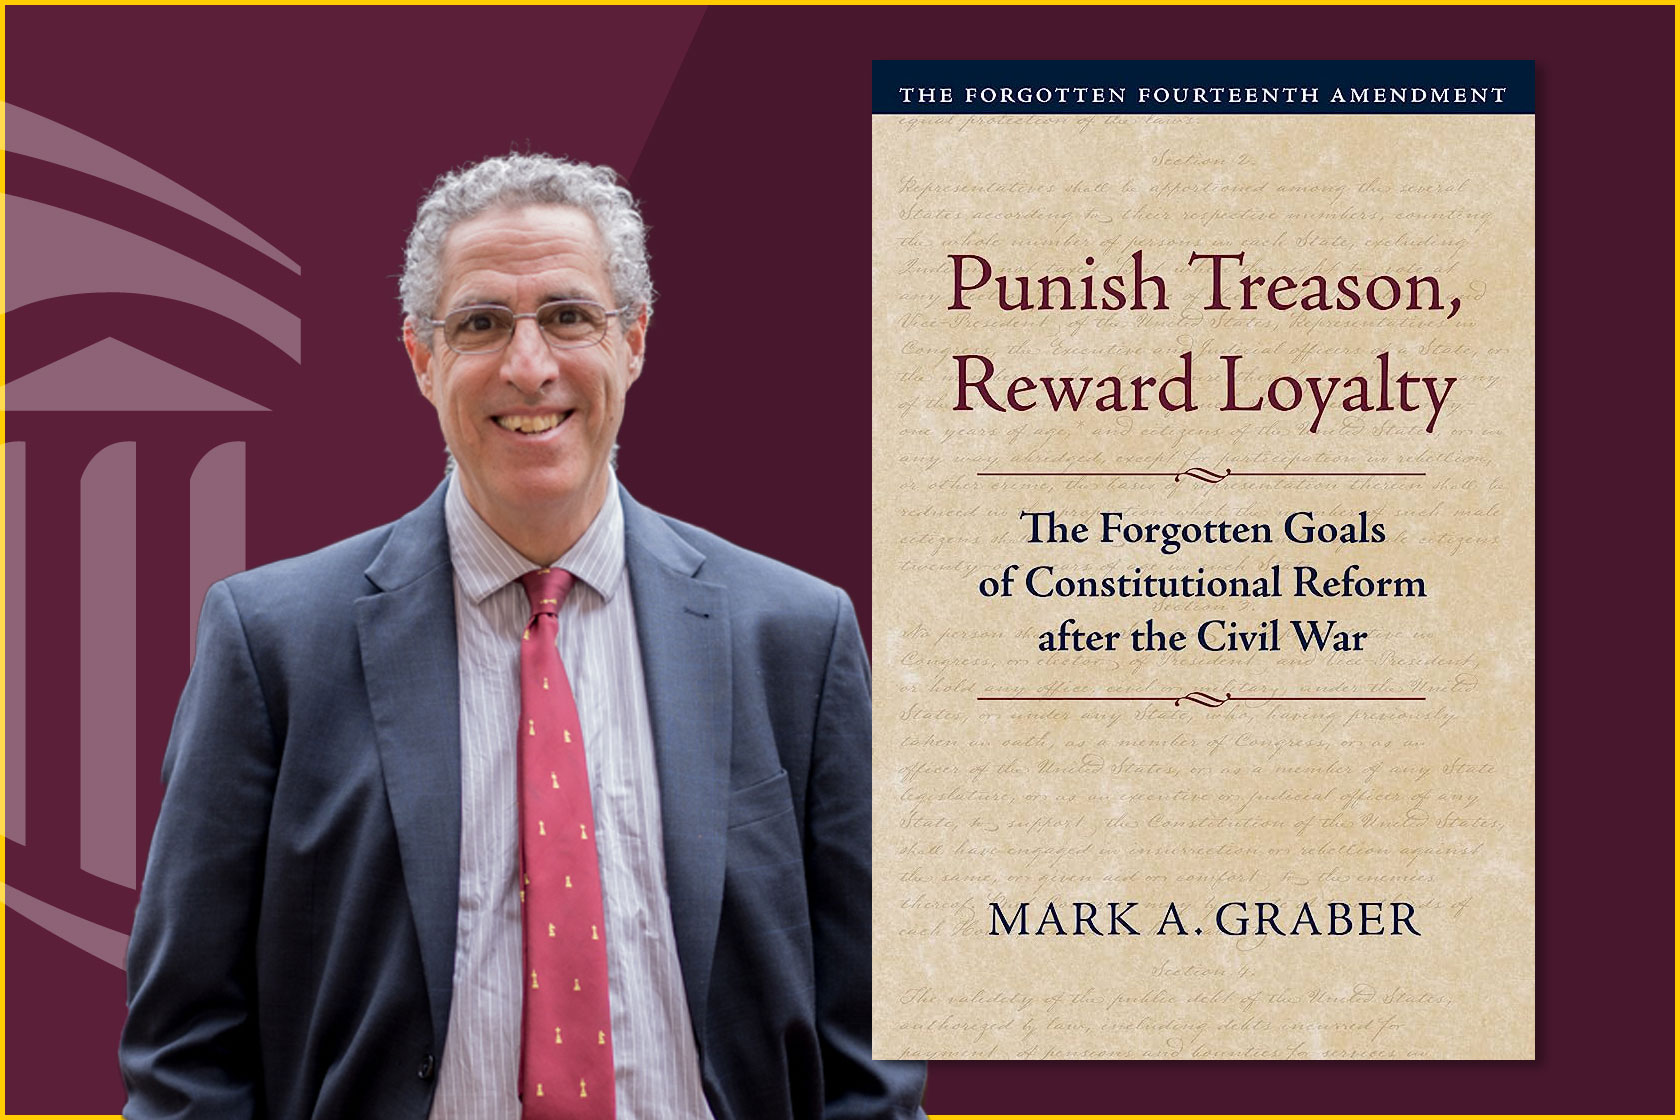 Professor Mark A. Graber publishes groundbreaking book on the Fourteenth Amendment